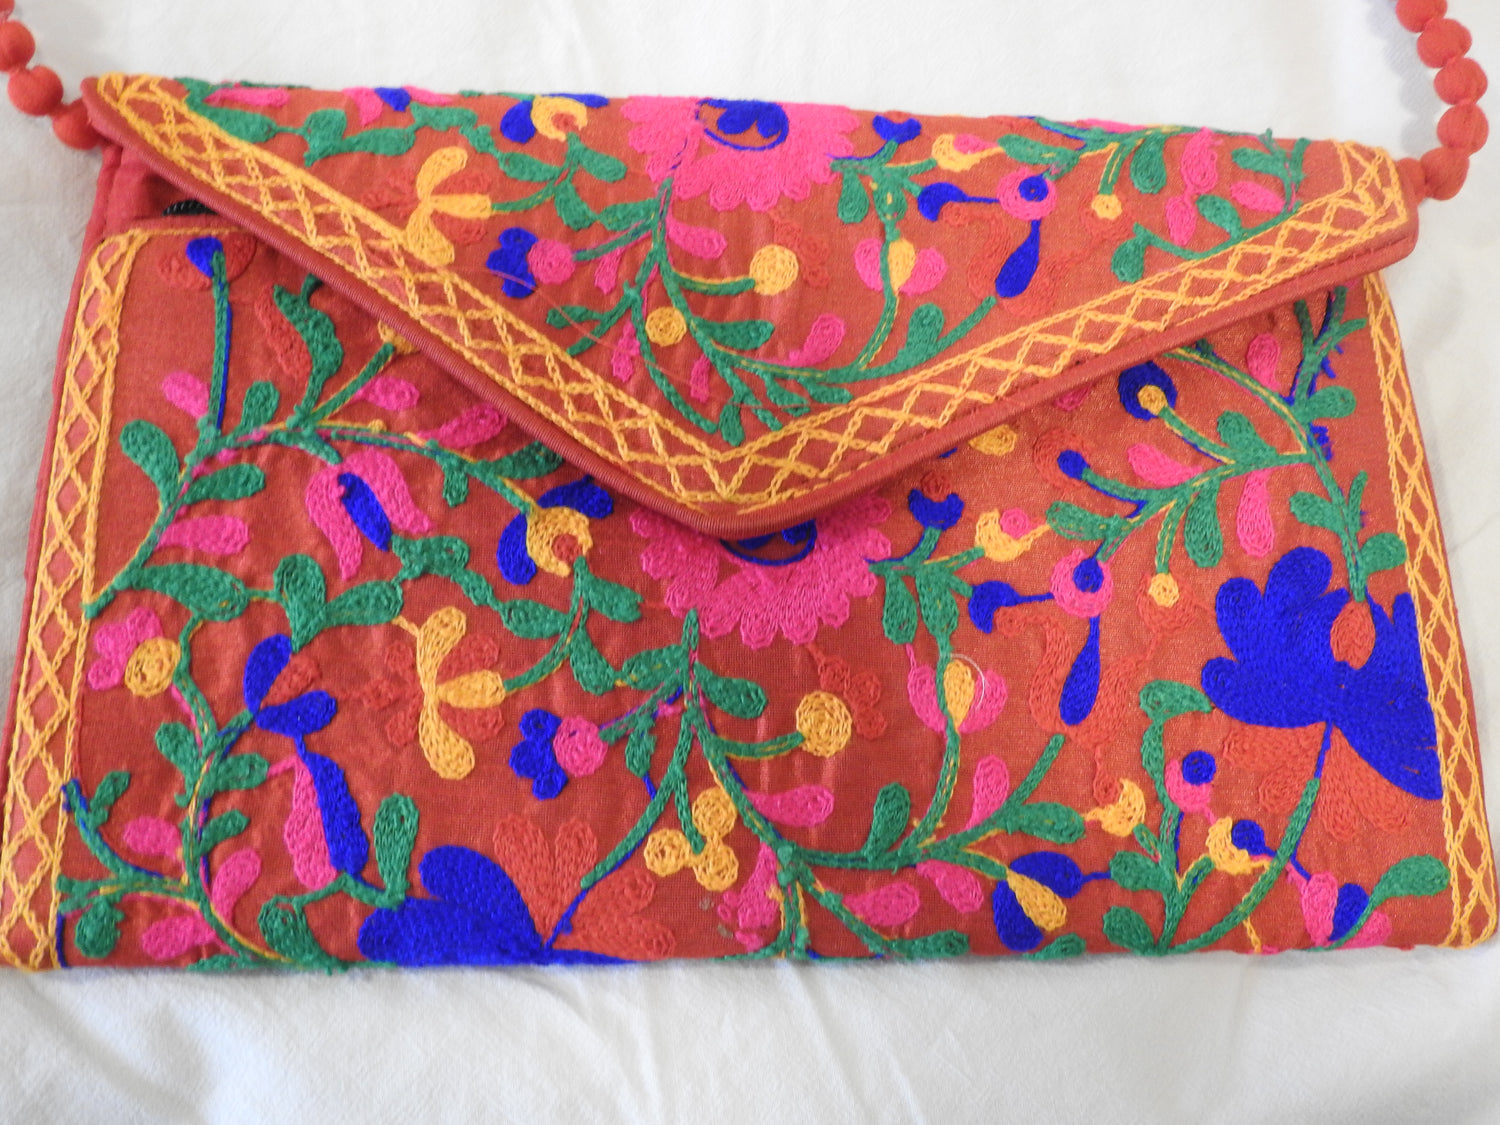 banjarra colorful clutch bag, hand made 